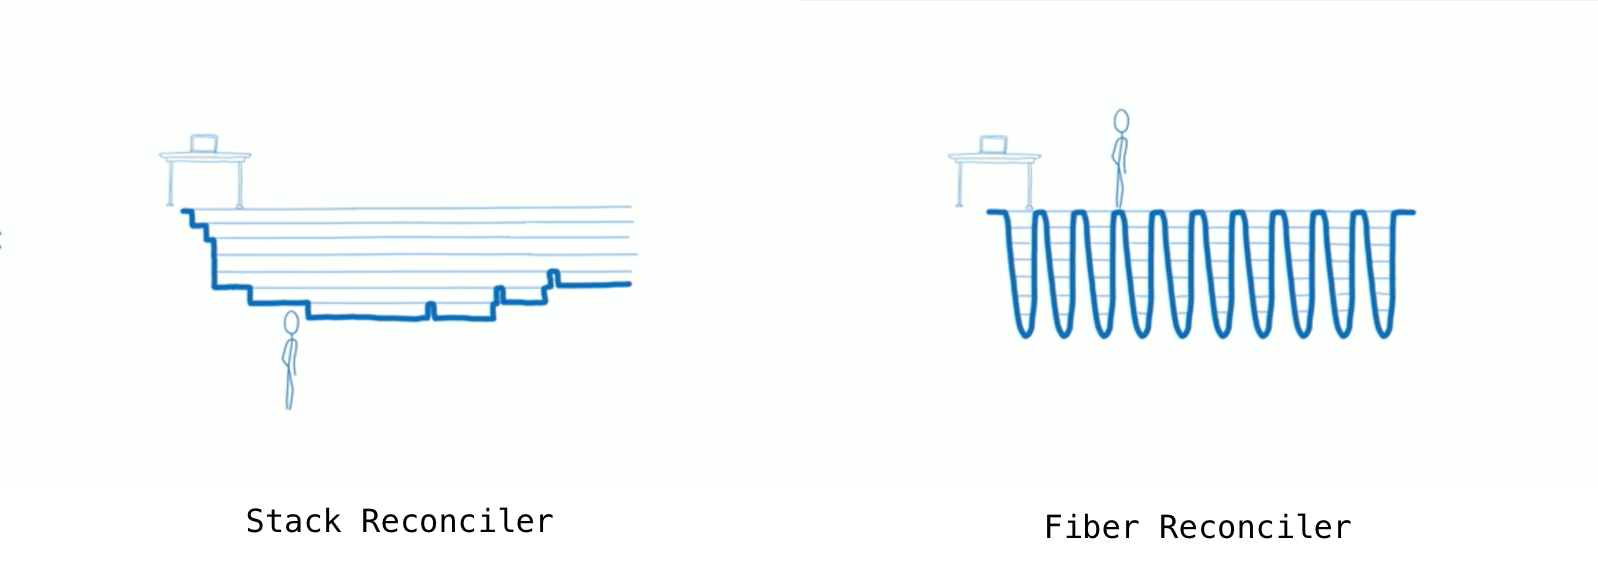 stack-reconciler-vs-fiber-reconciler